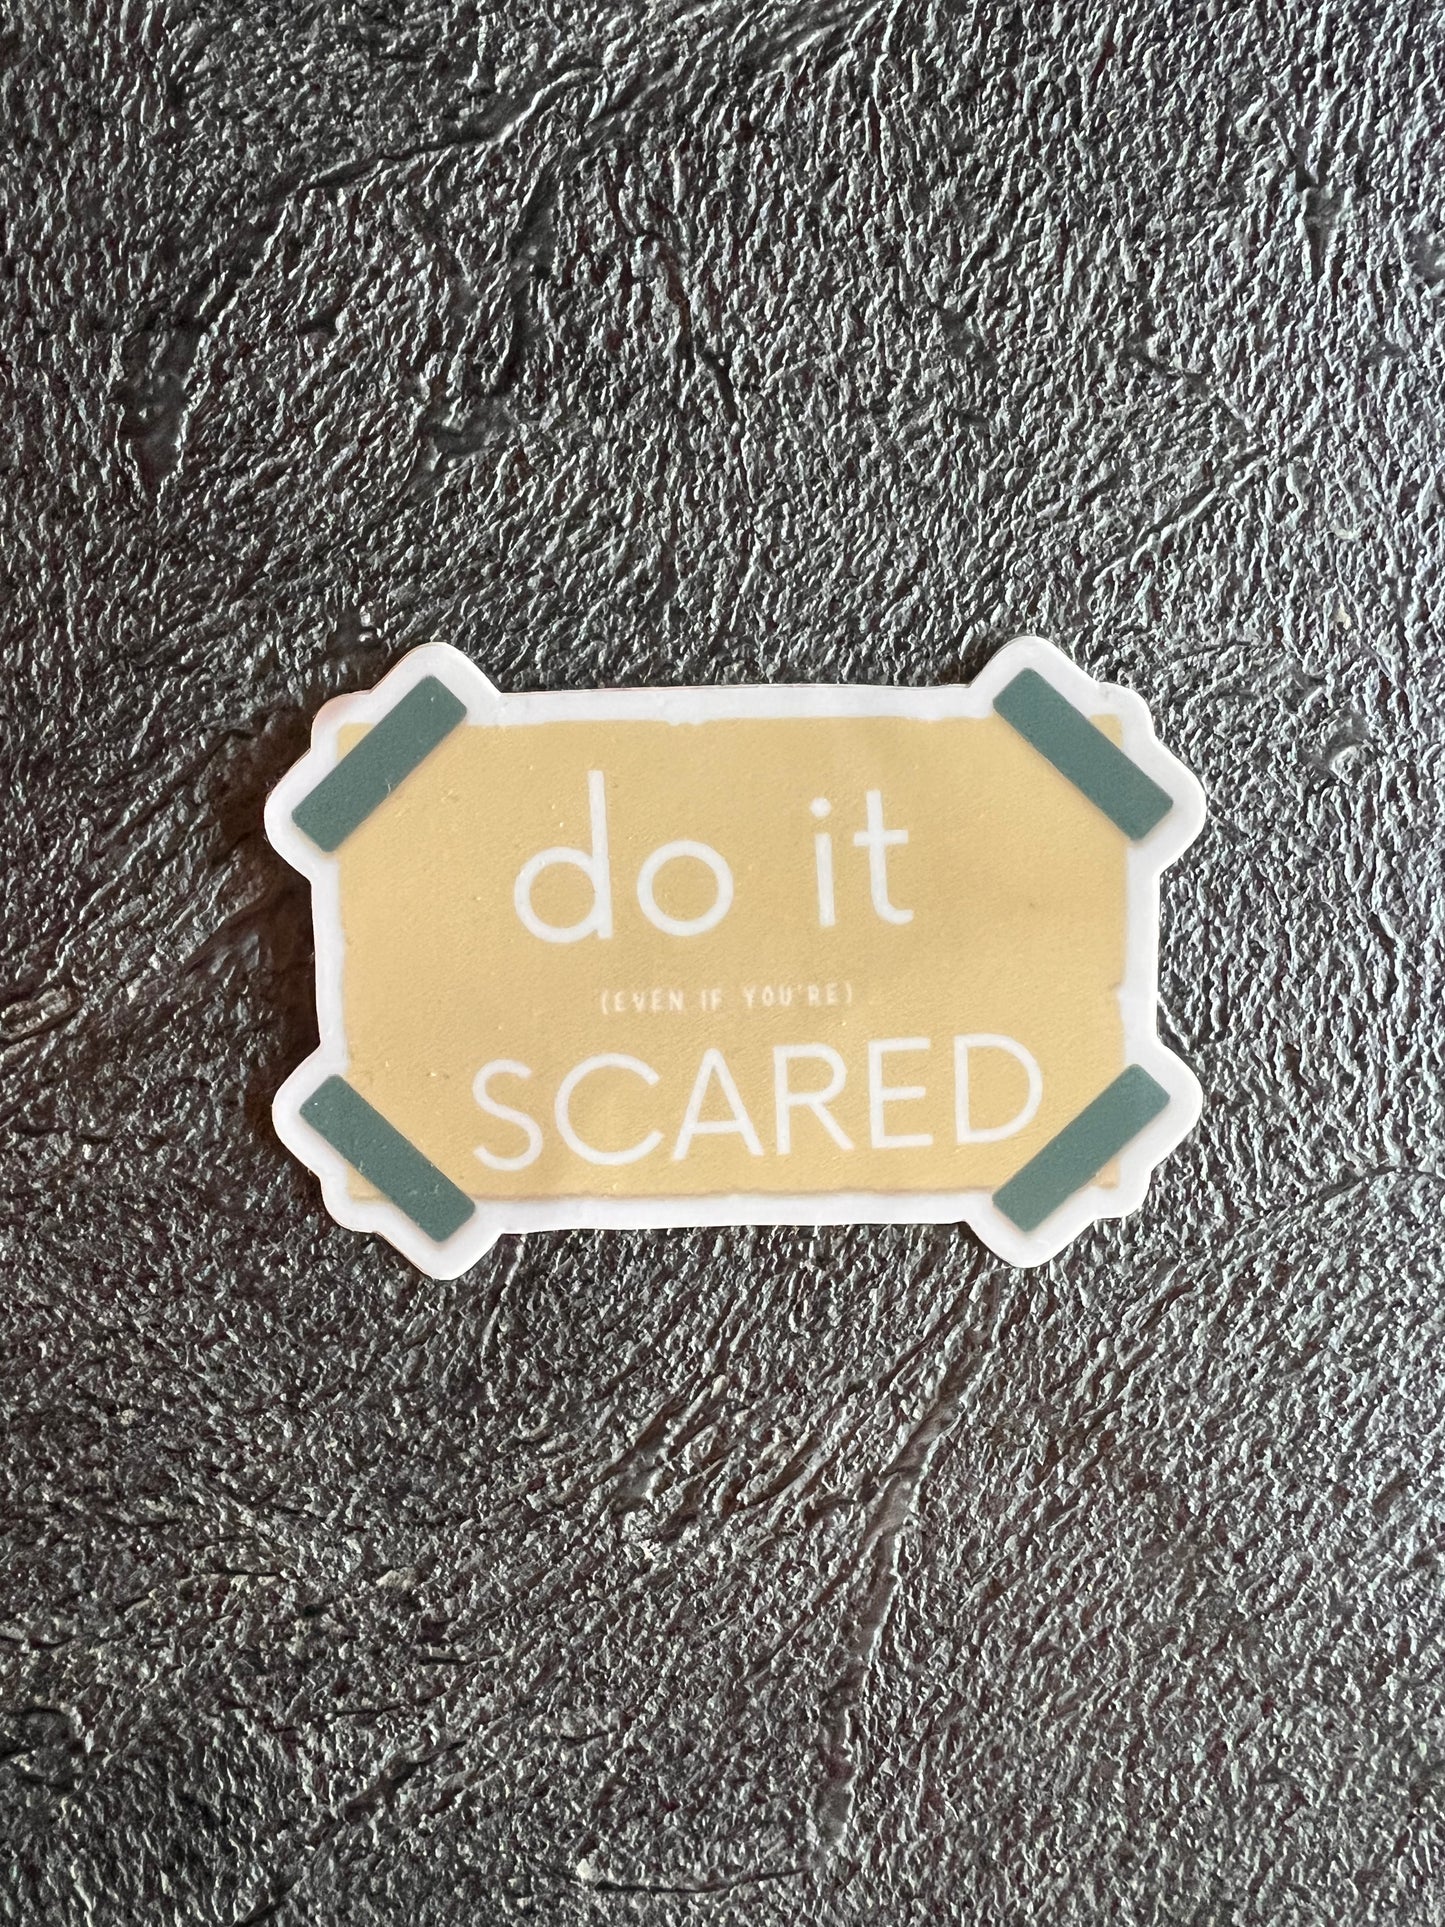 Do it scared sticker